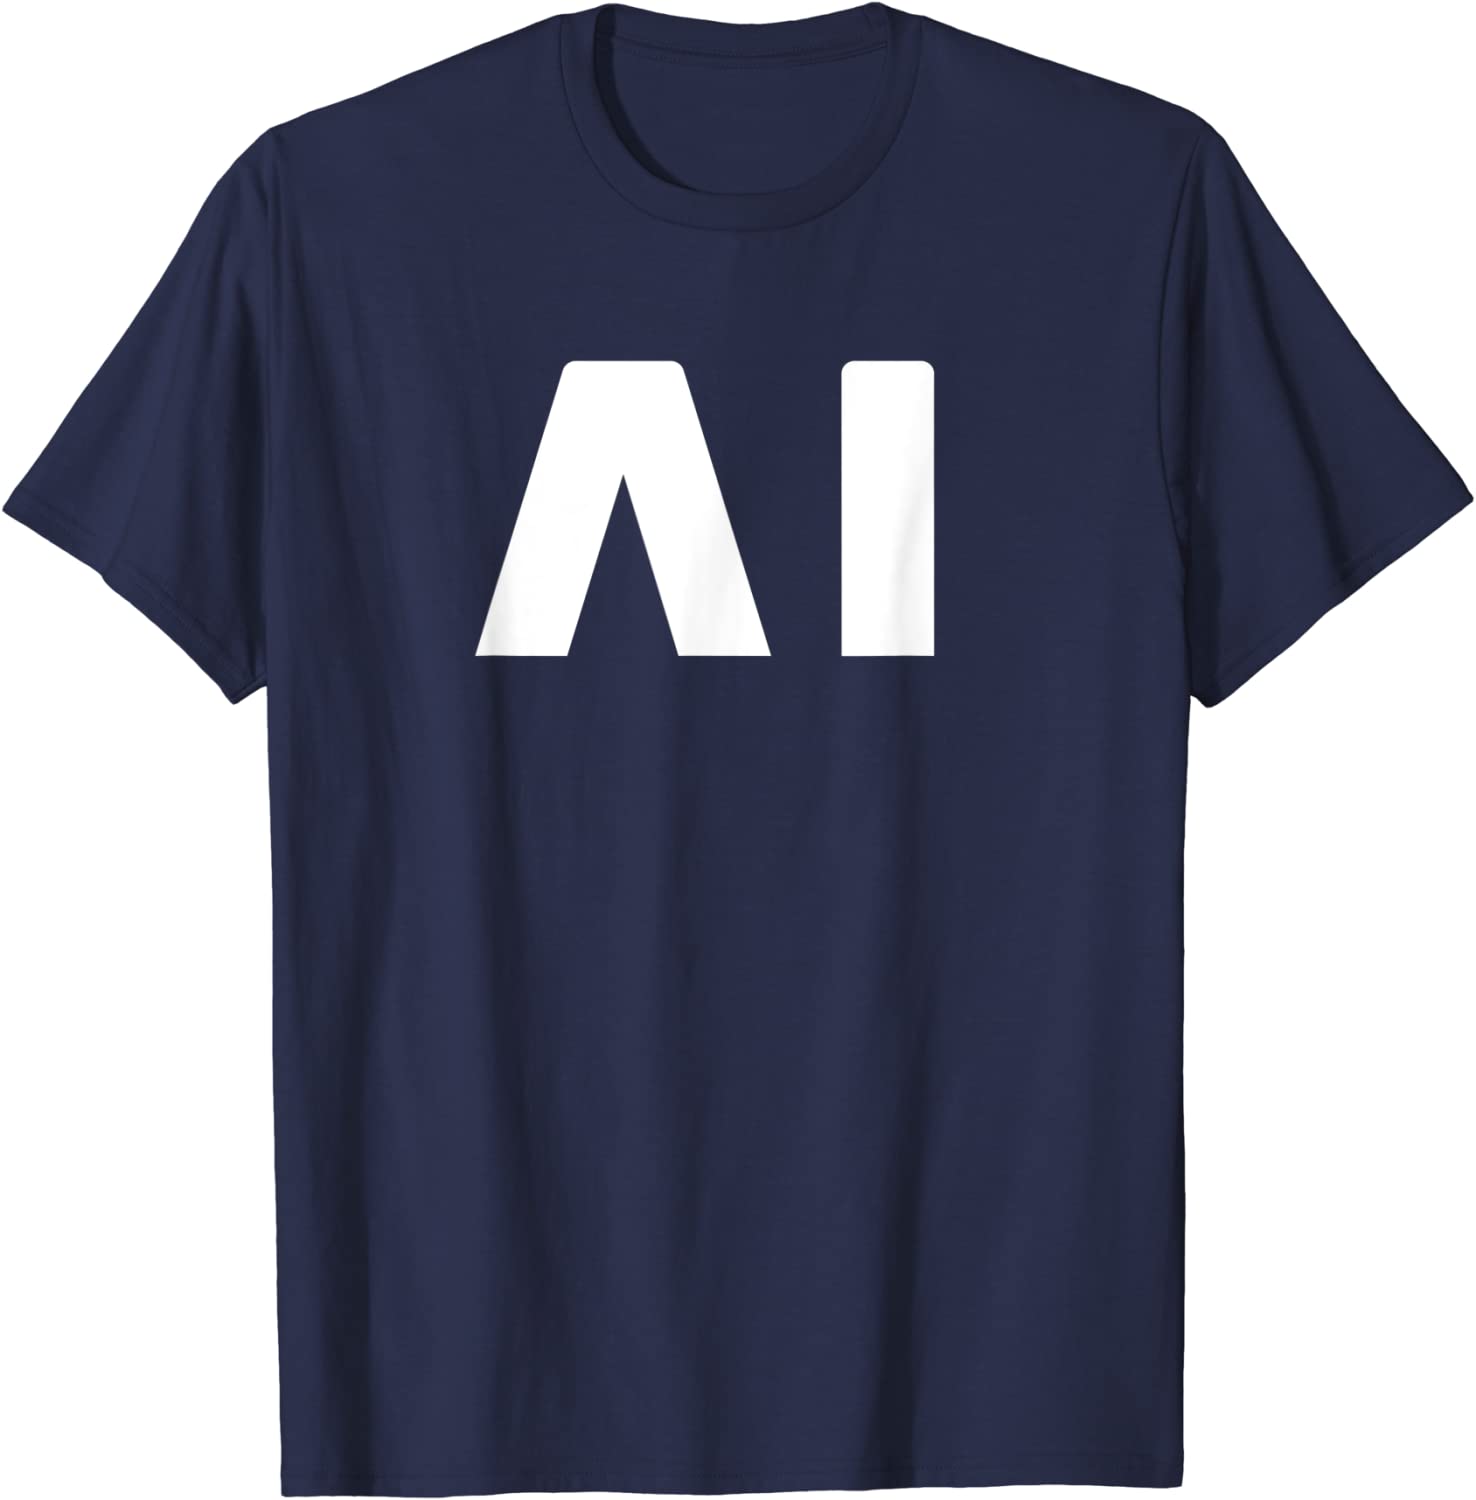 AI - Artificial Intelligence A.I Shirt